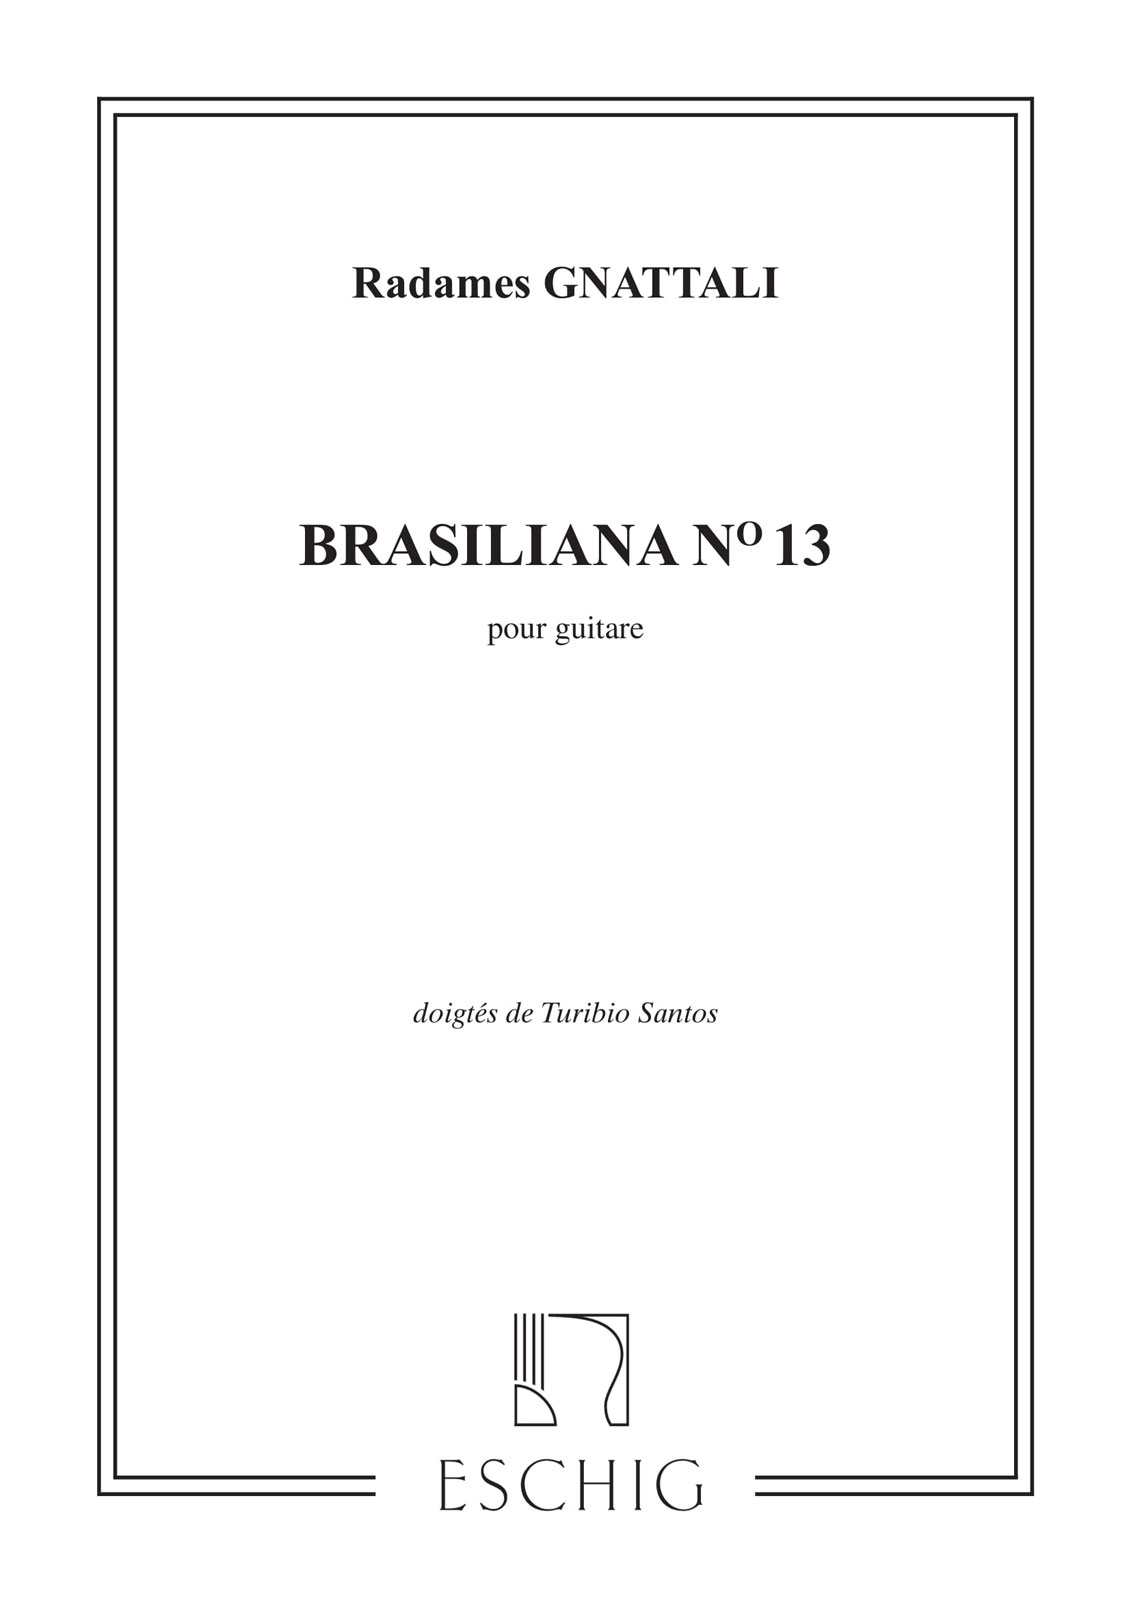 EDITION MAX ESCHIG GNATTALI RADAMES - BRASILIANA N°13 - GUITARE